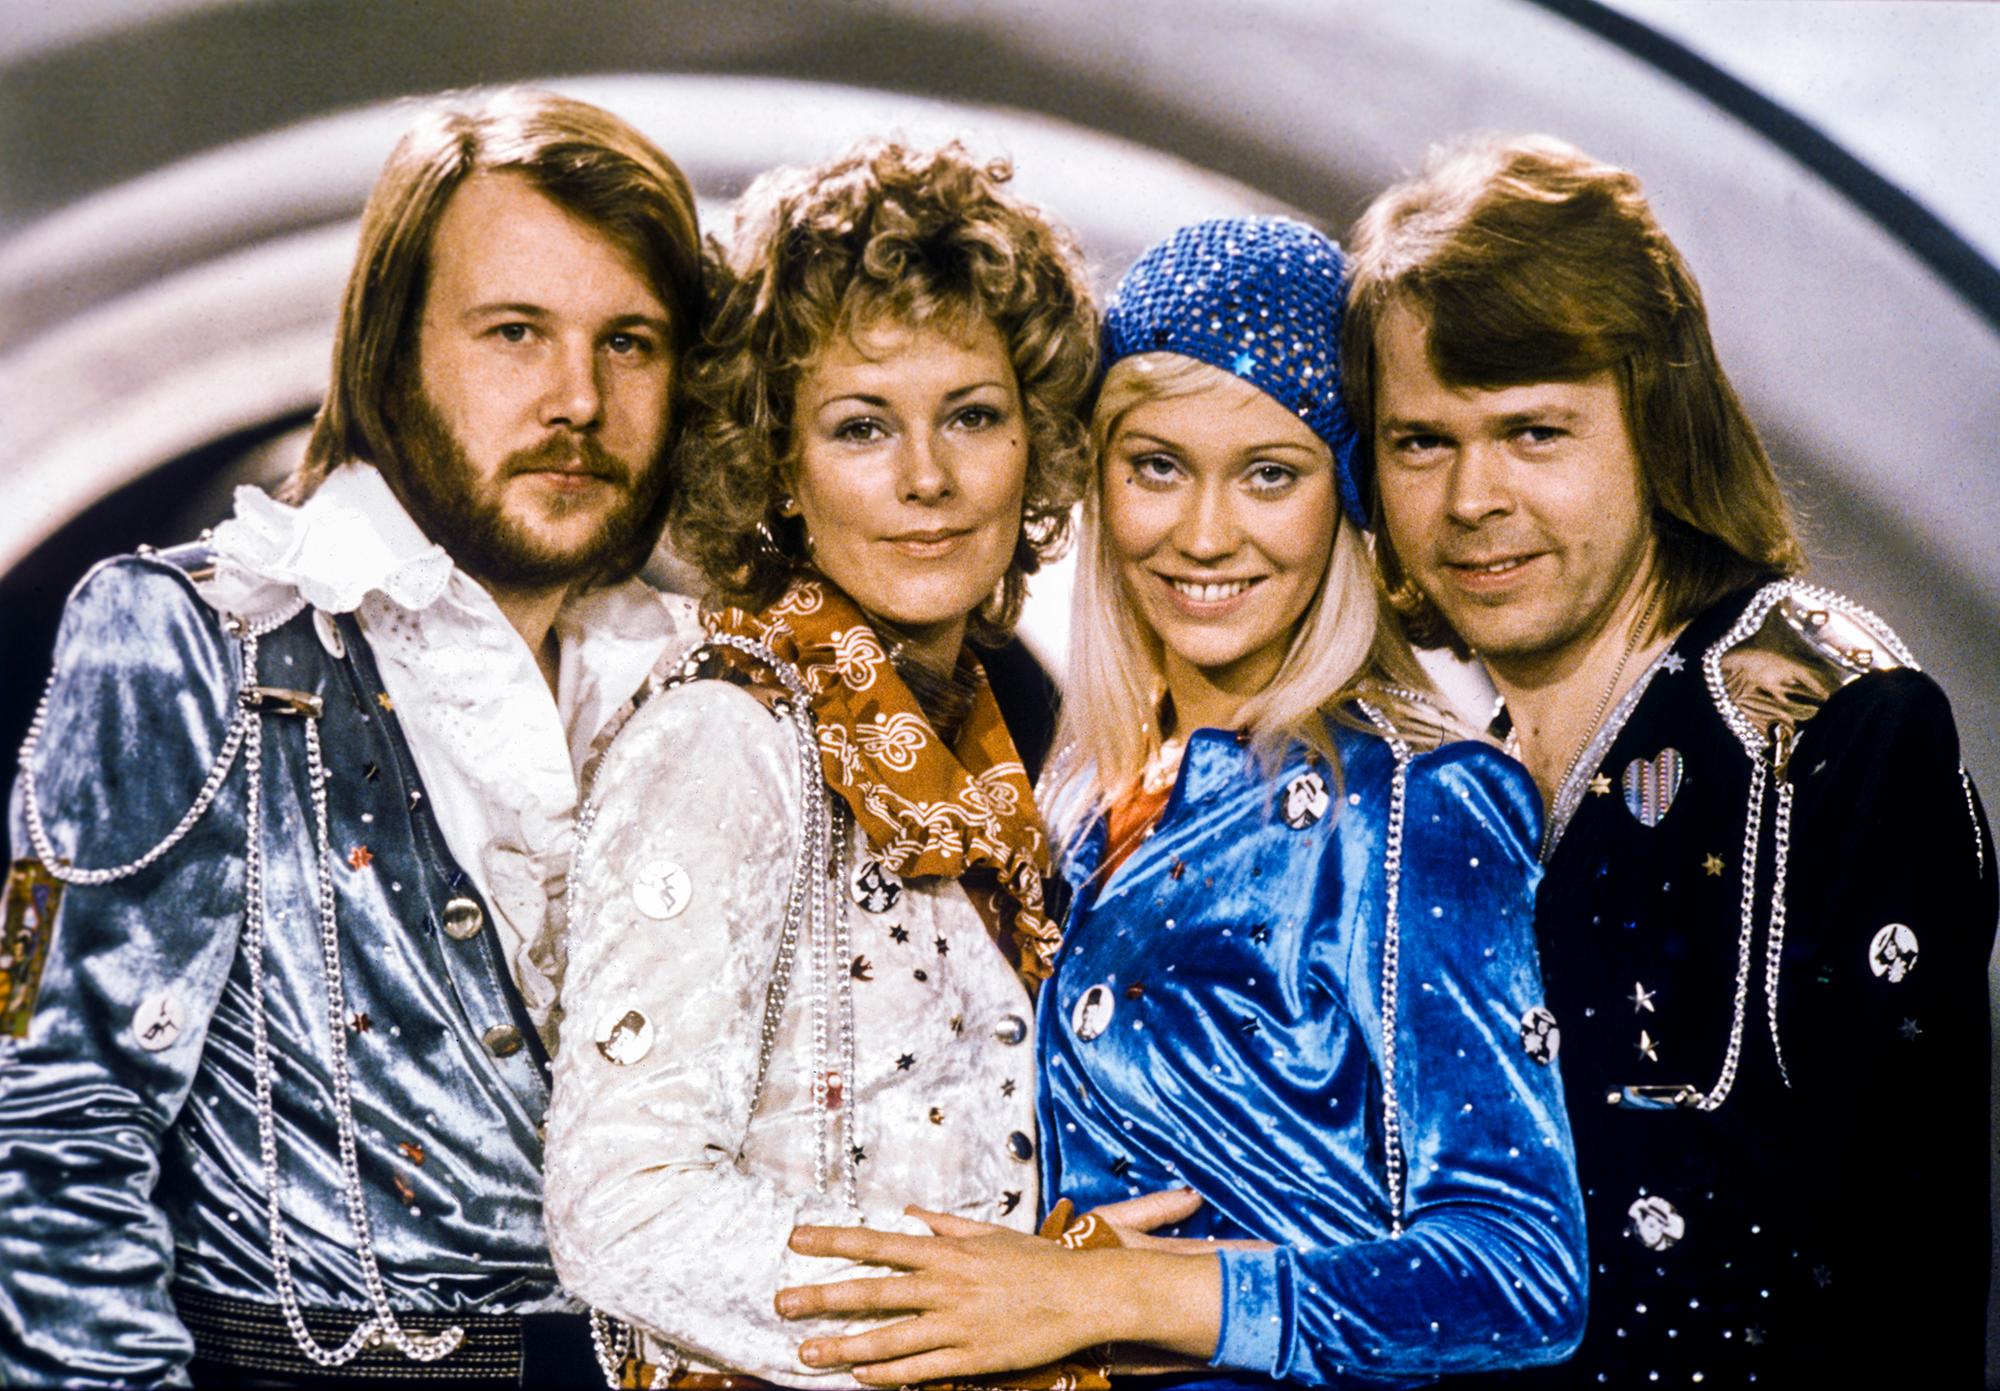 The ABBA members in 1974.